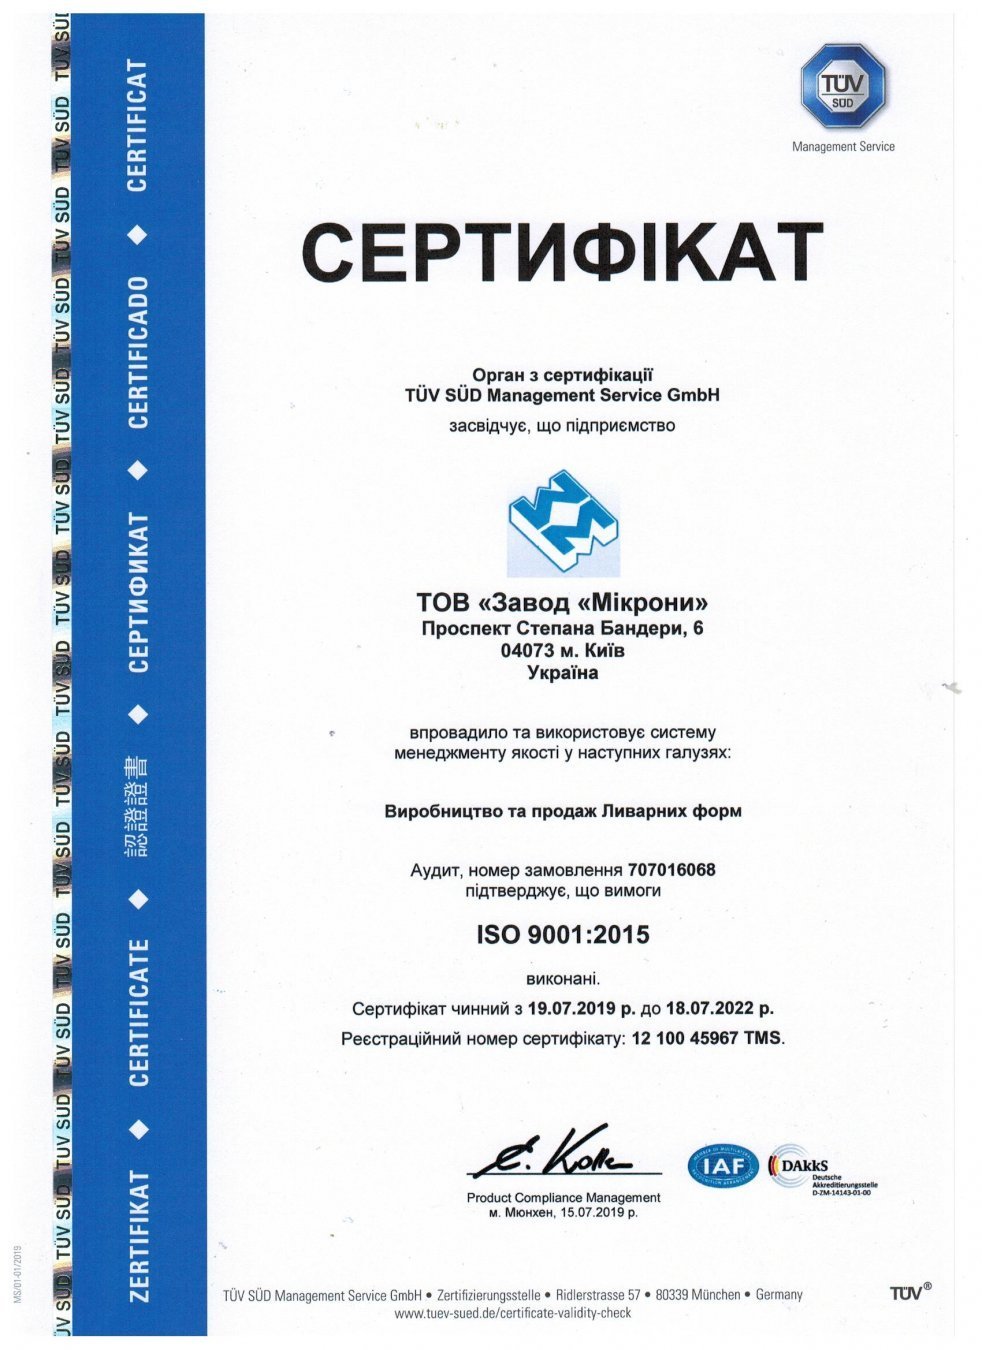 Certificate_ukr_1_1.jpeg